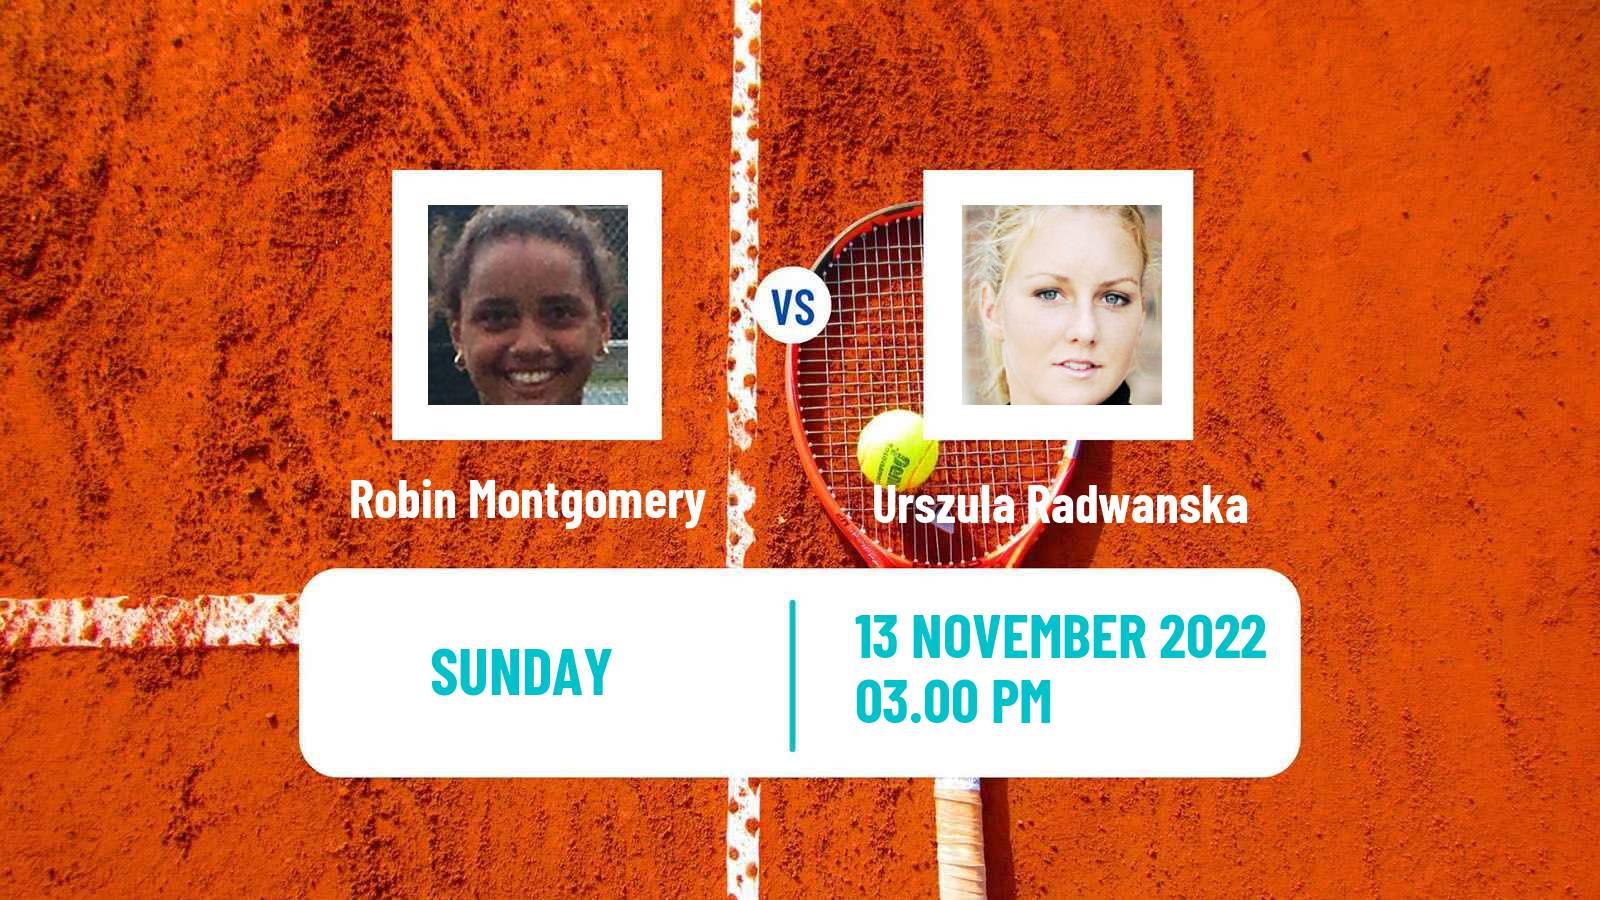 Tennis ITF Tournaments Robin Montgomery - Urszula Radwanska